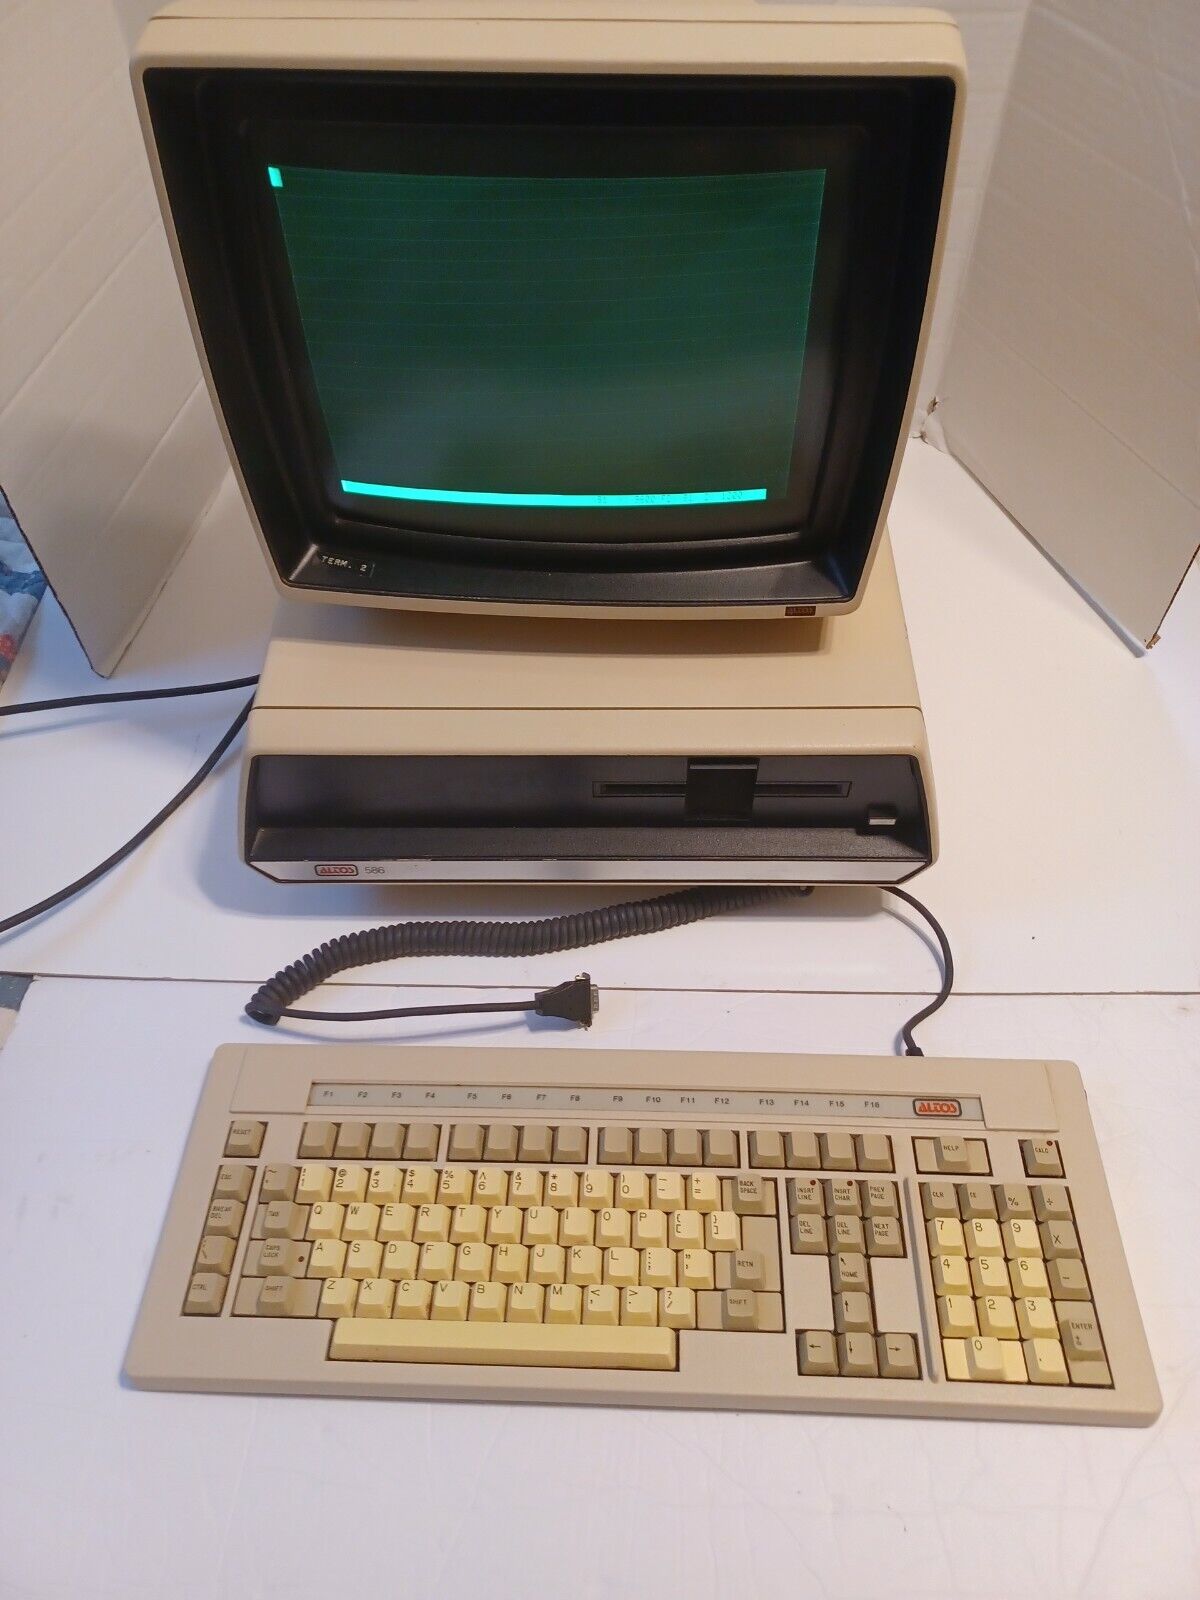 RARE Vintage Altos 586 Computer AS-IS